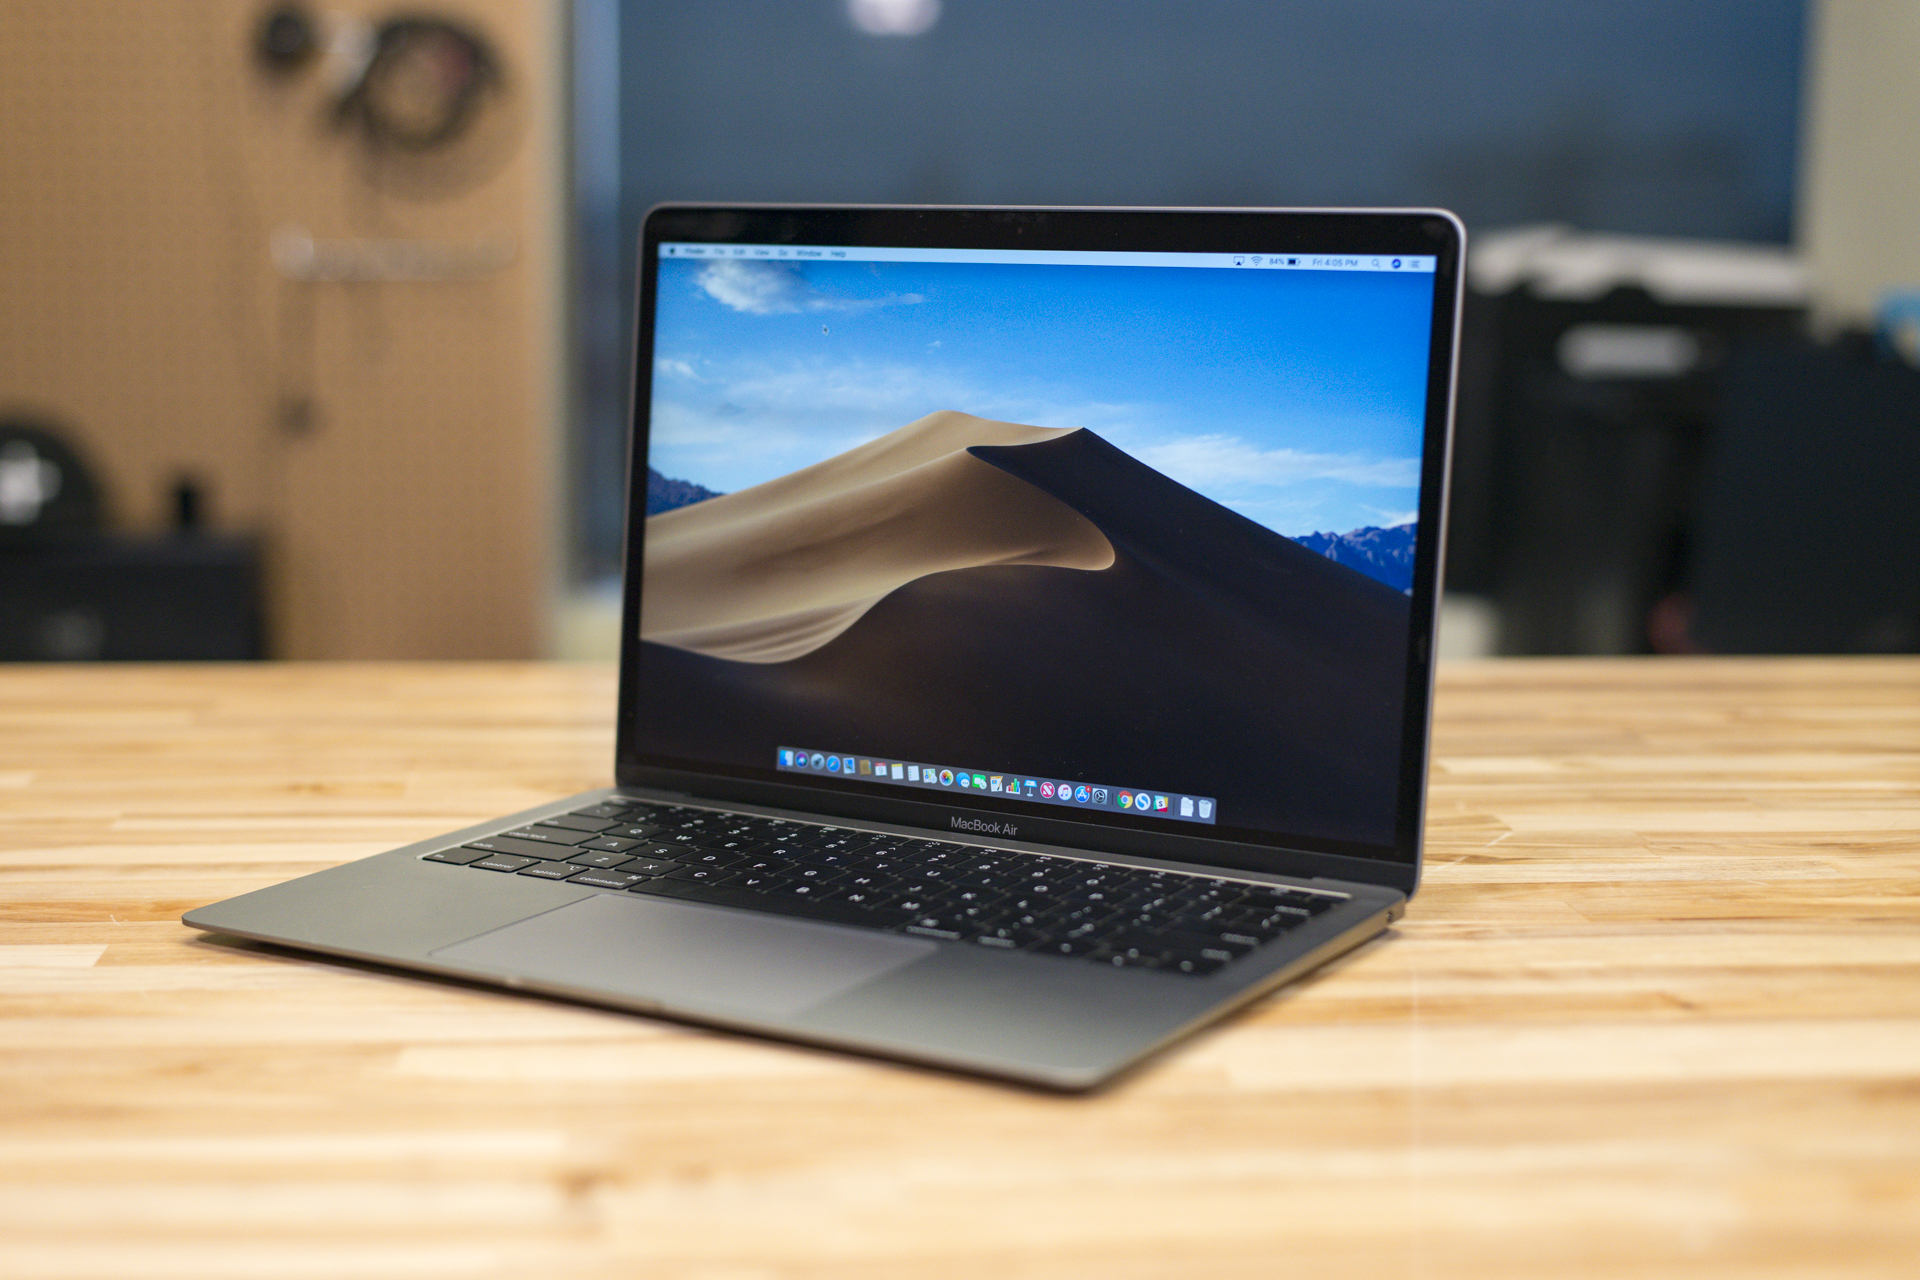 Promo code savings on new MacBook Pro 13 inch and MacBook Air 2019